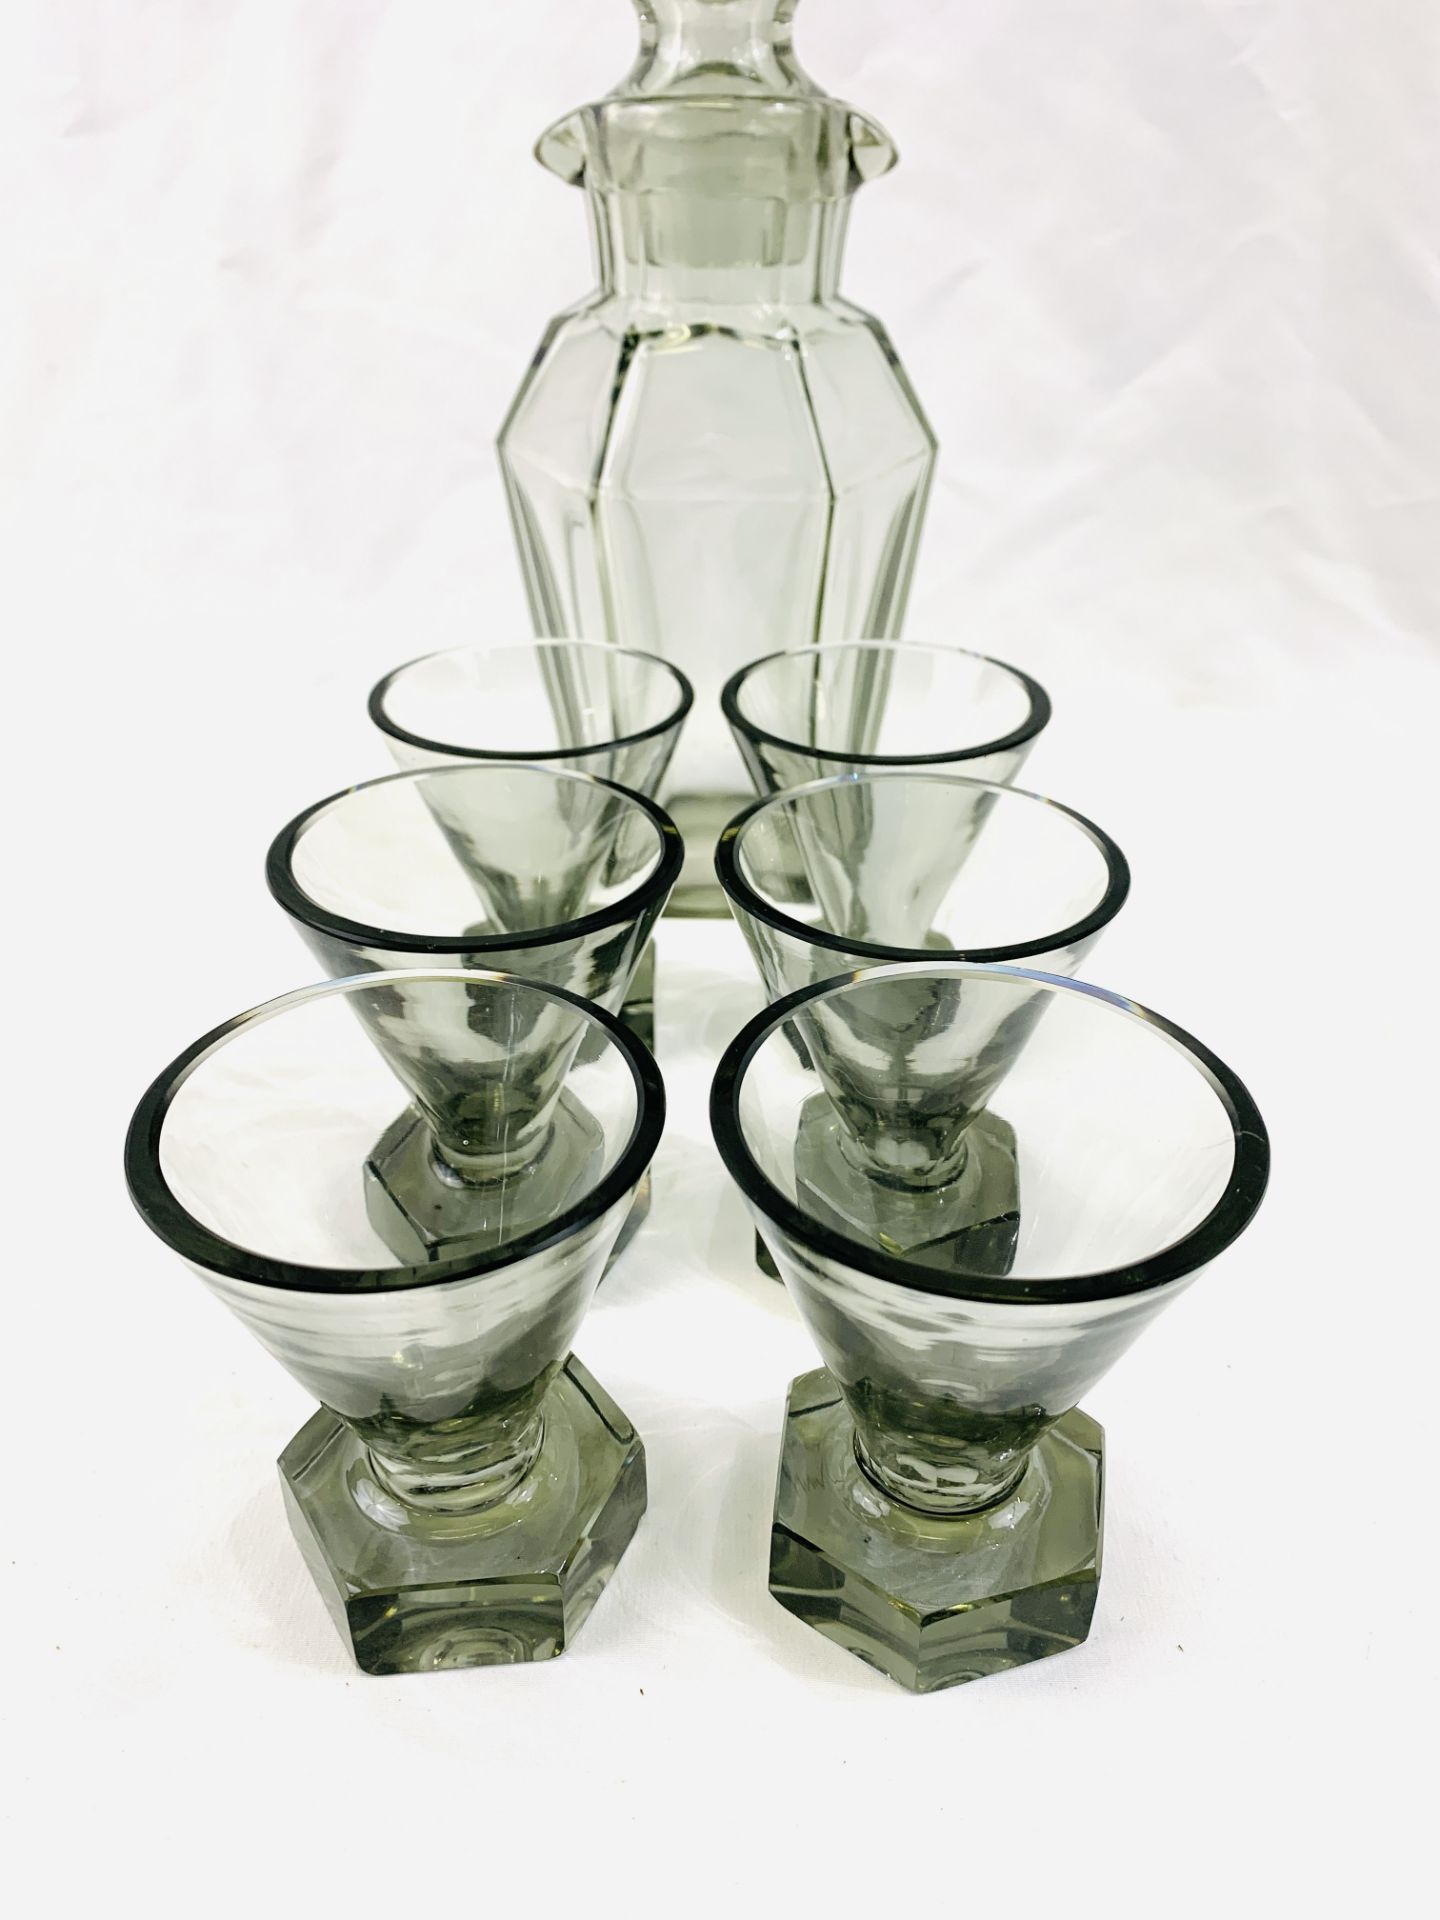 Art Deco smoked glass cocktail set - Image 2 of 6